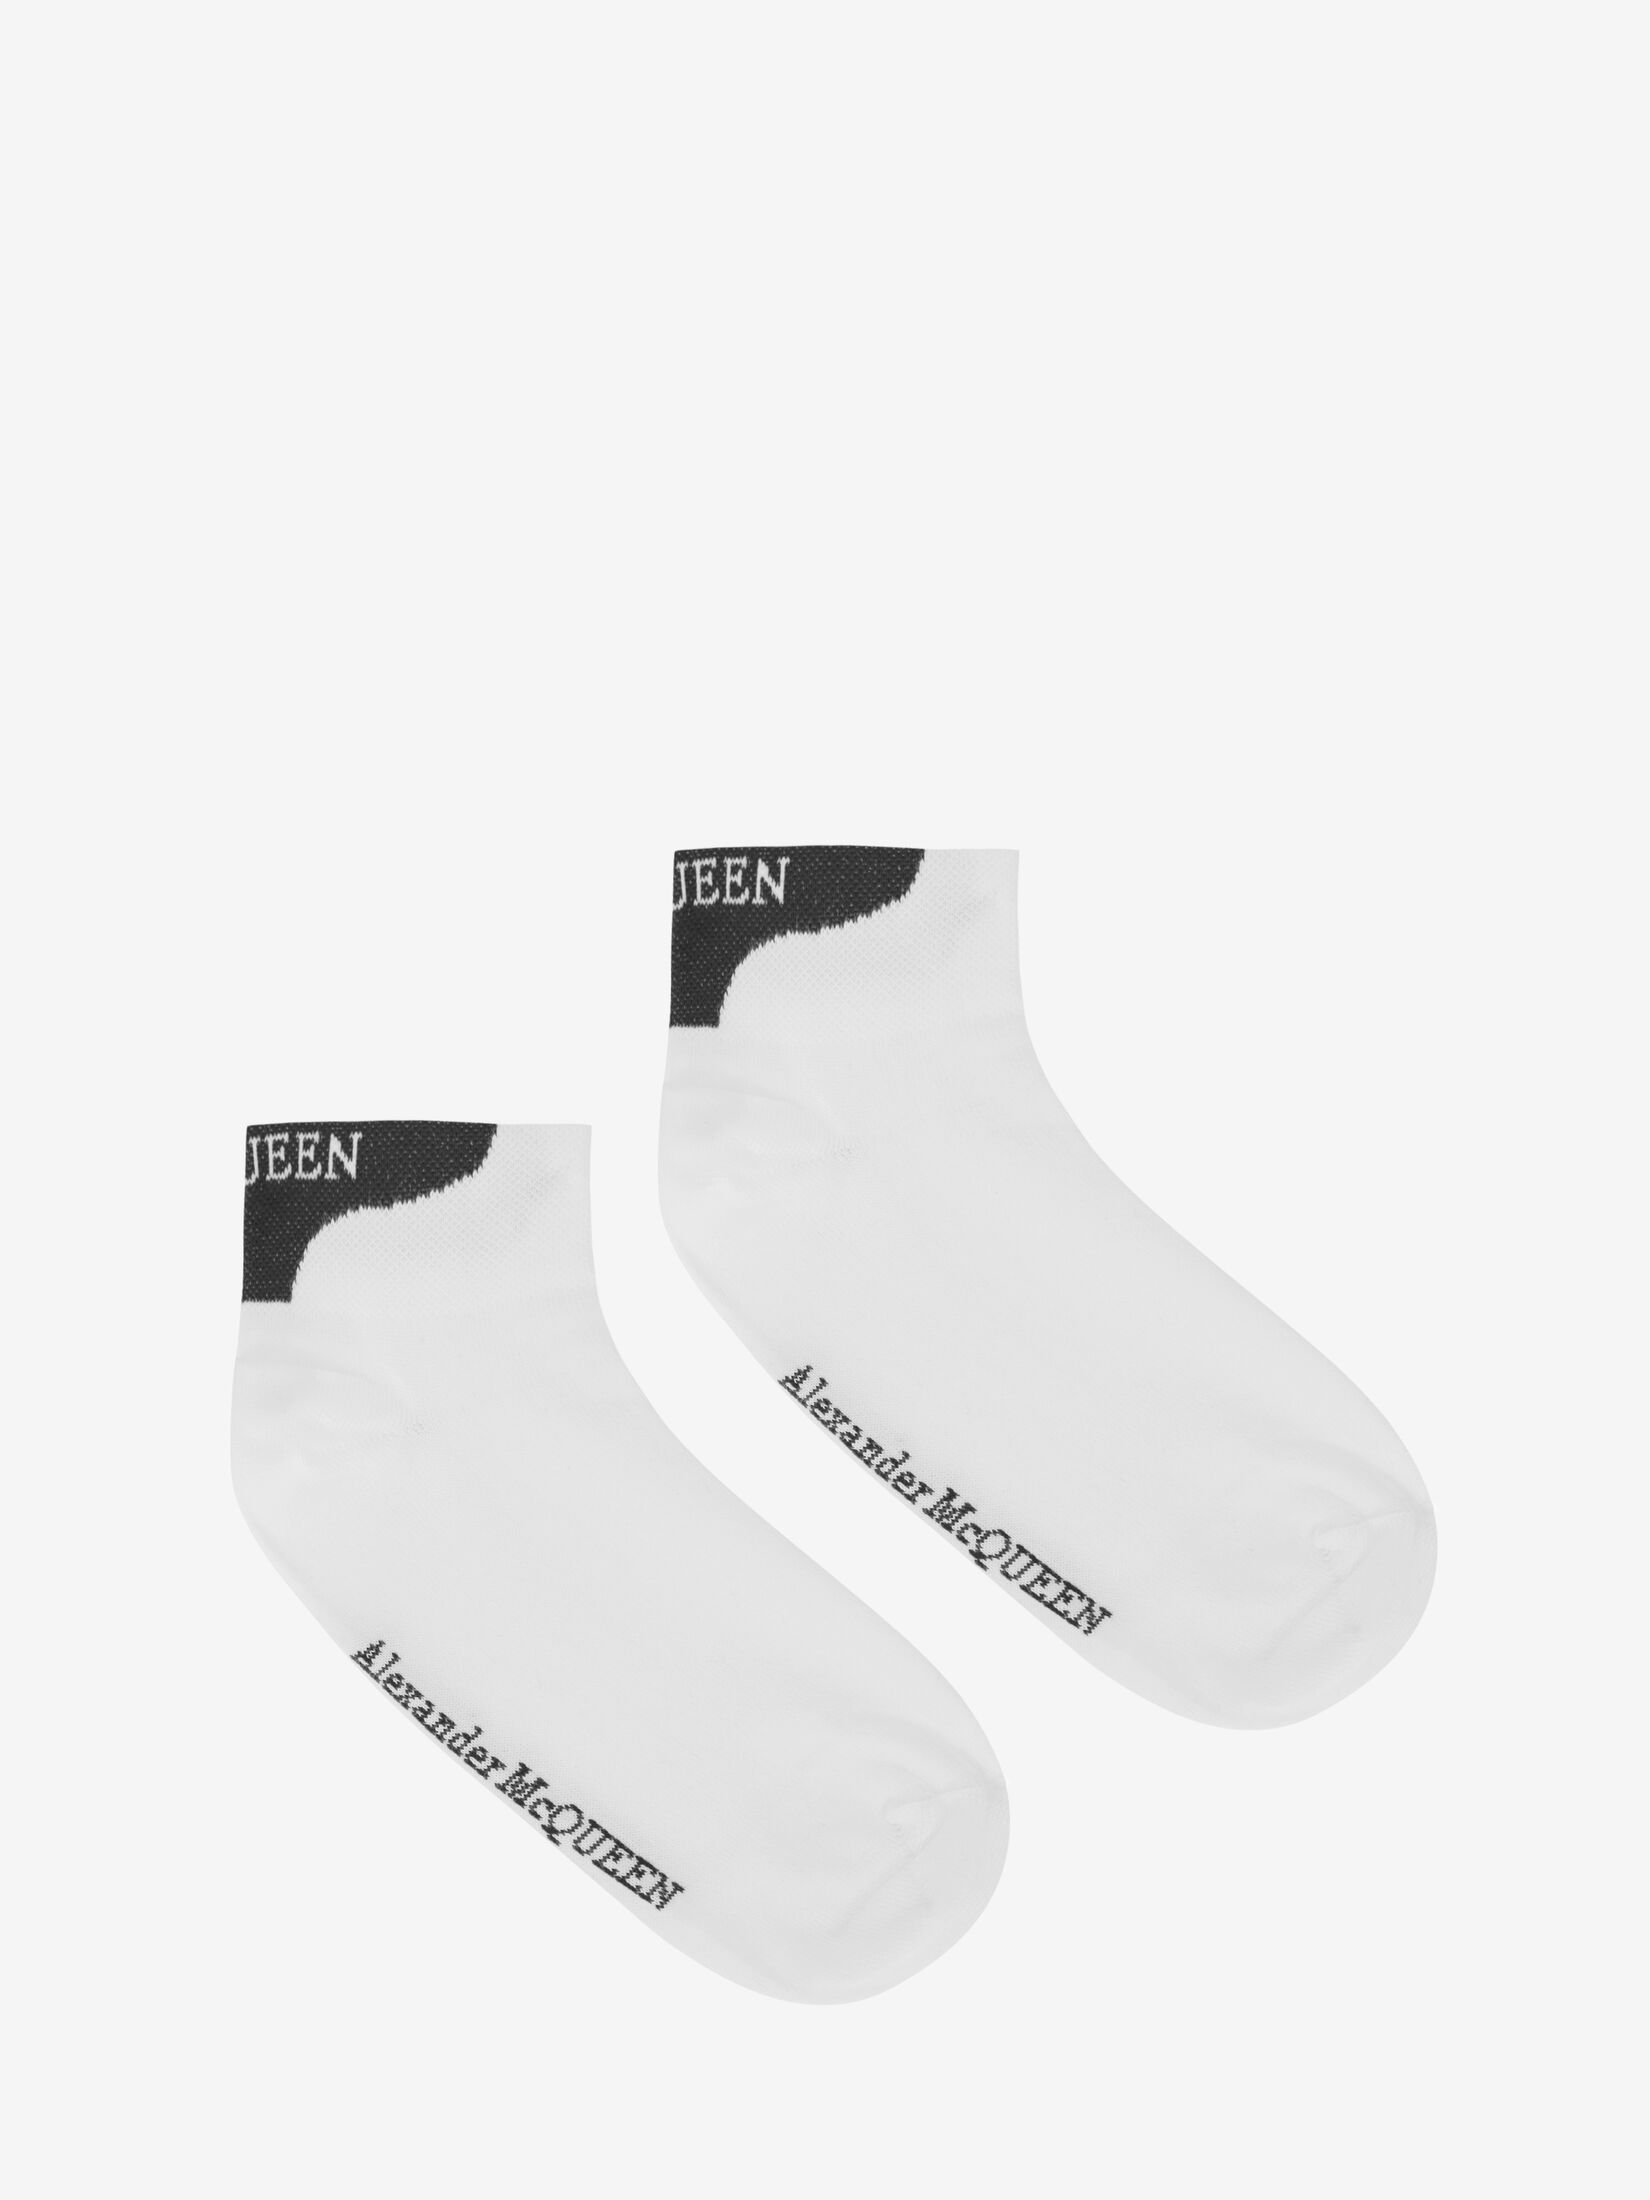 Alexander McQueen Ankle Socks in Black/White | Alexander McQueen GB